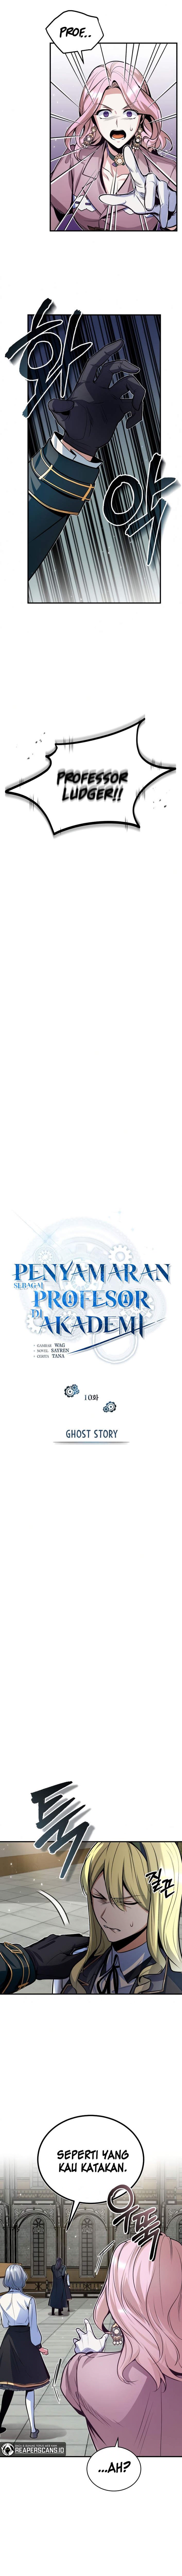 Academy’s Undercover Professor Chapter 10